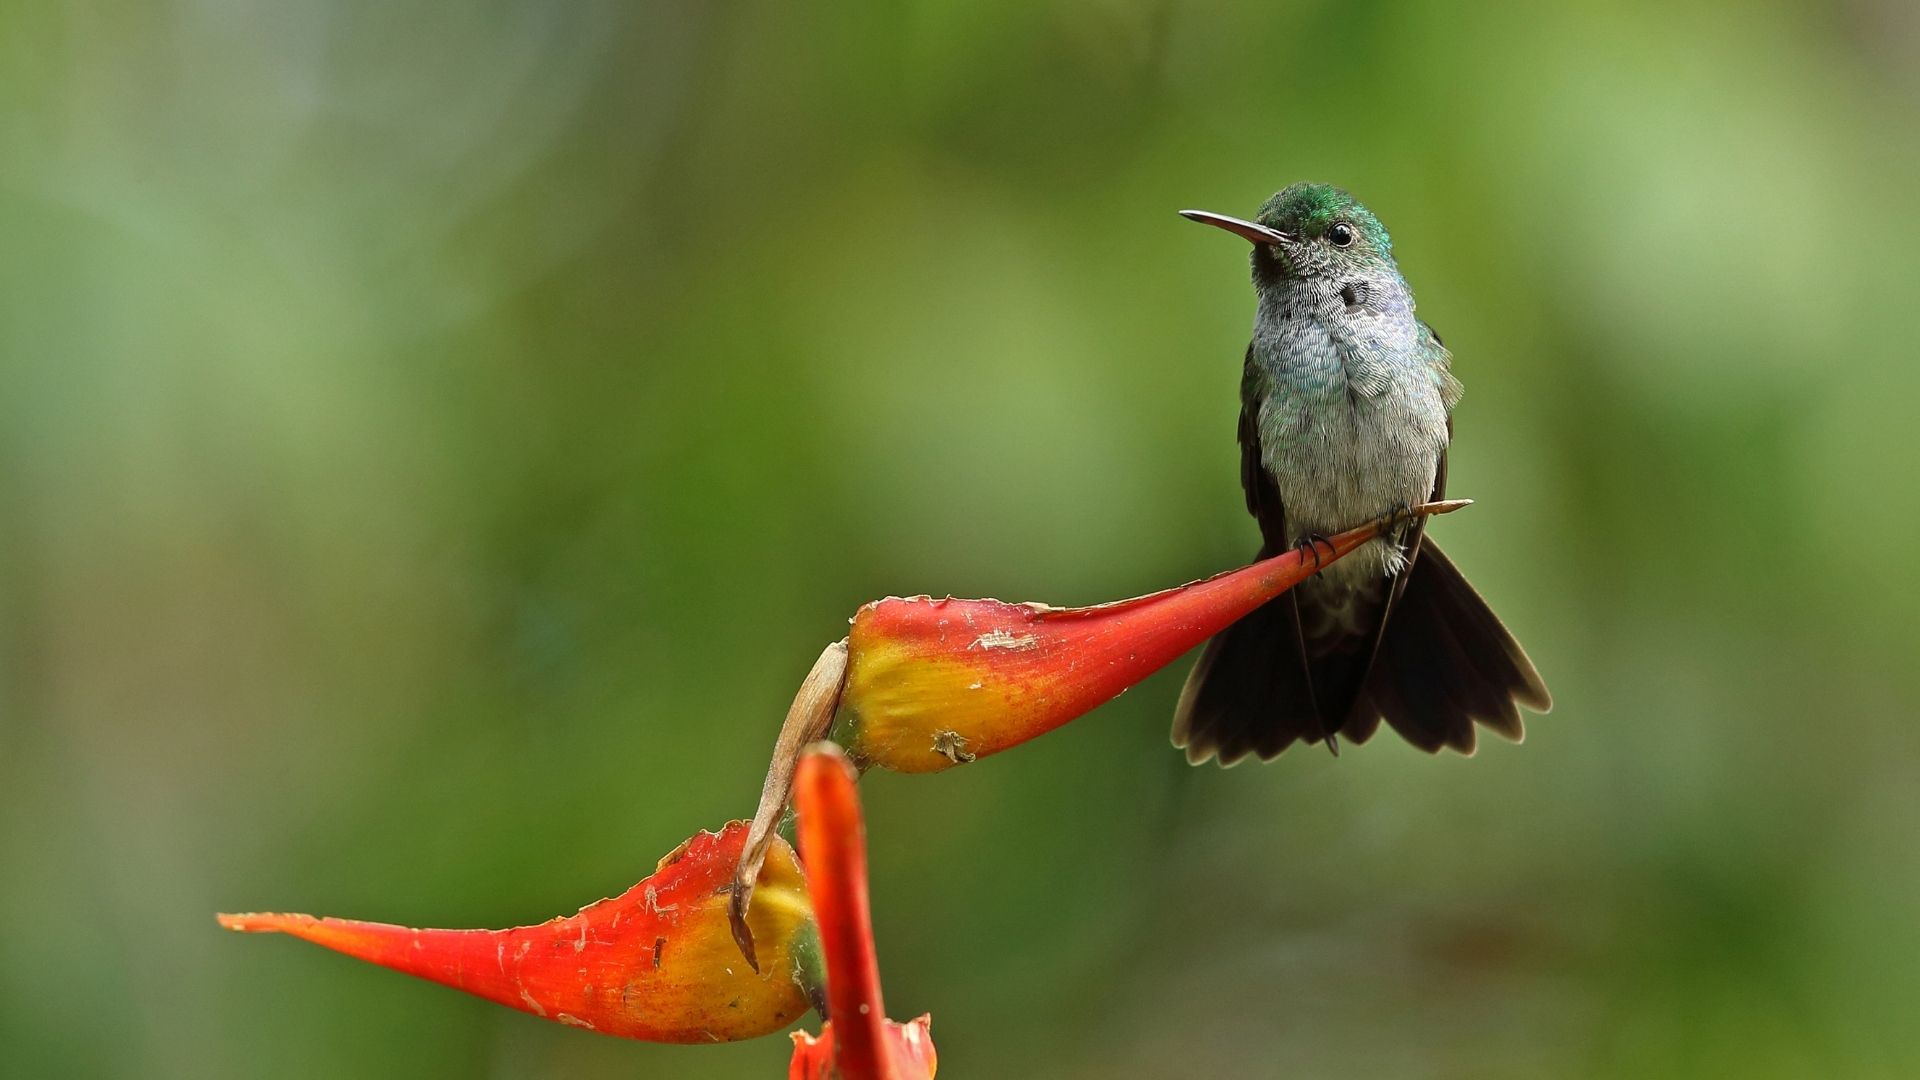 Interesting Fact: Hummingbirds can't walk